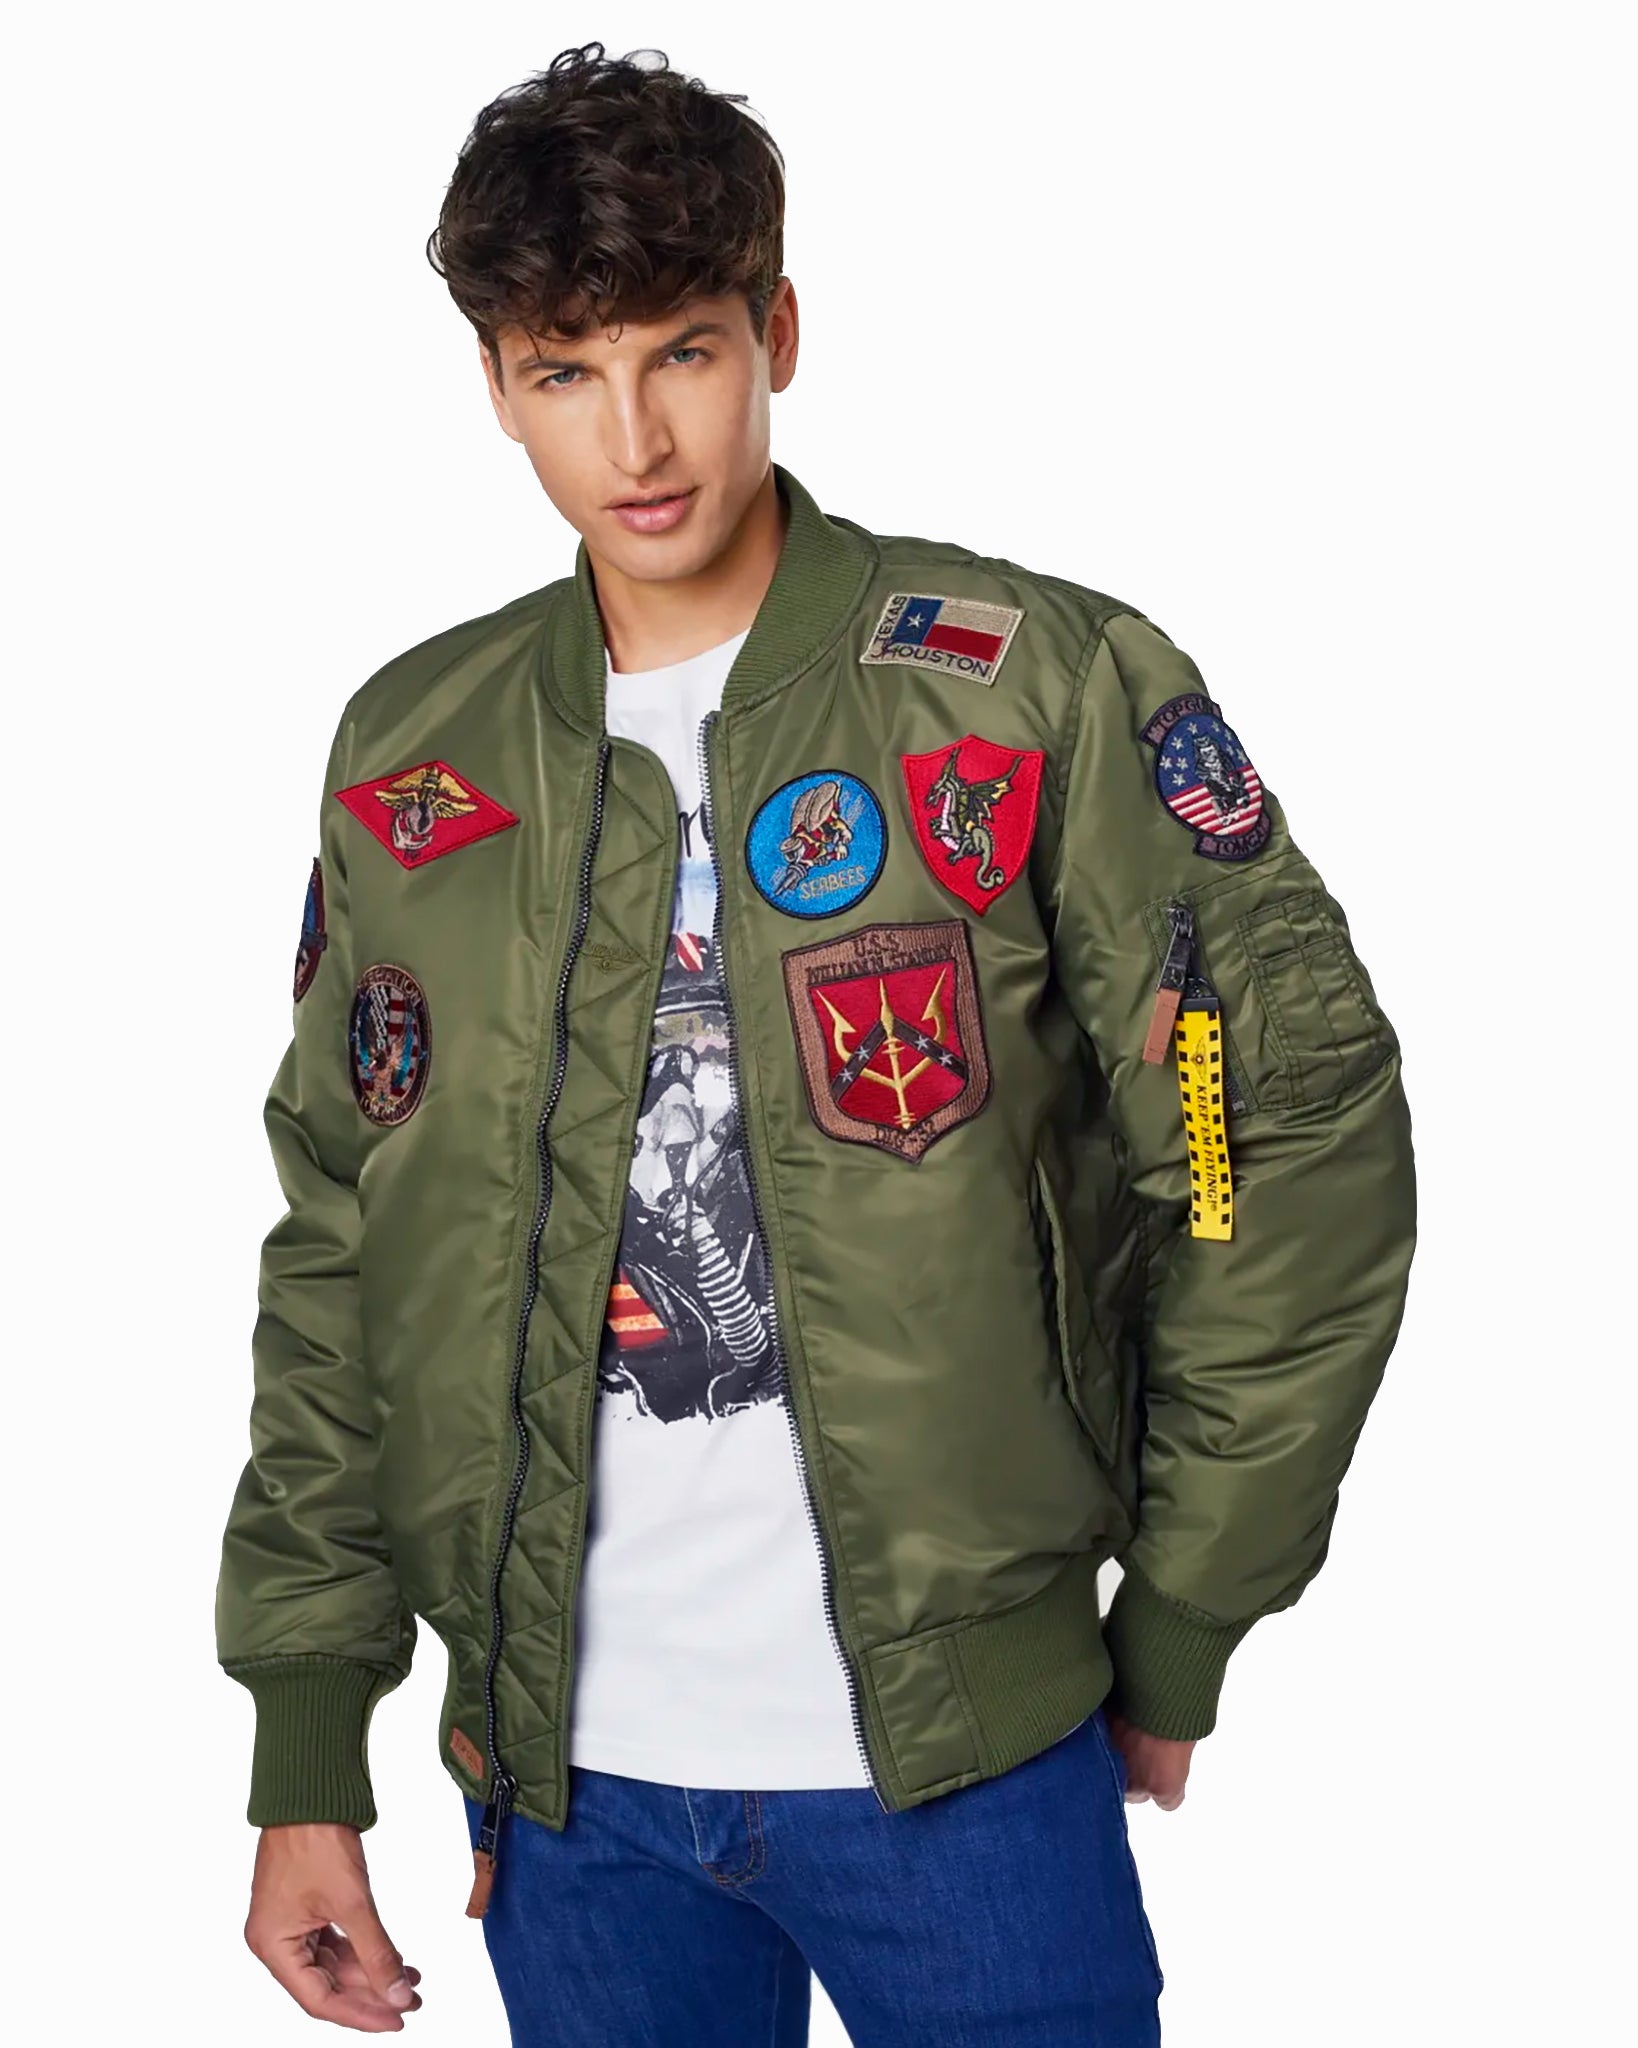 Men's Jacket | The Official Gun | Military Bomber Jacket, Flight jacket, Tom Cruise Maverick Jacket, Leather jacket,Jackets with patches